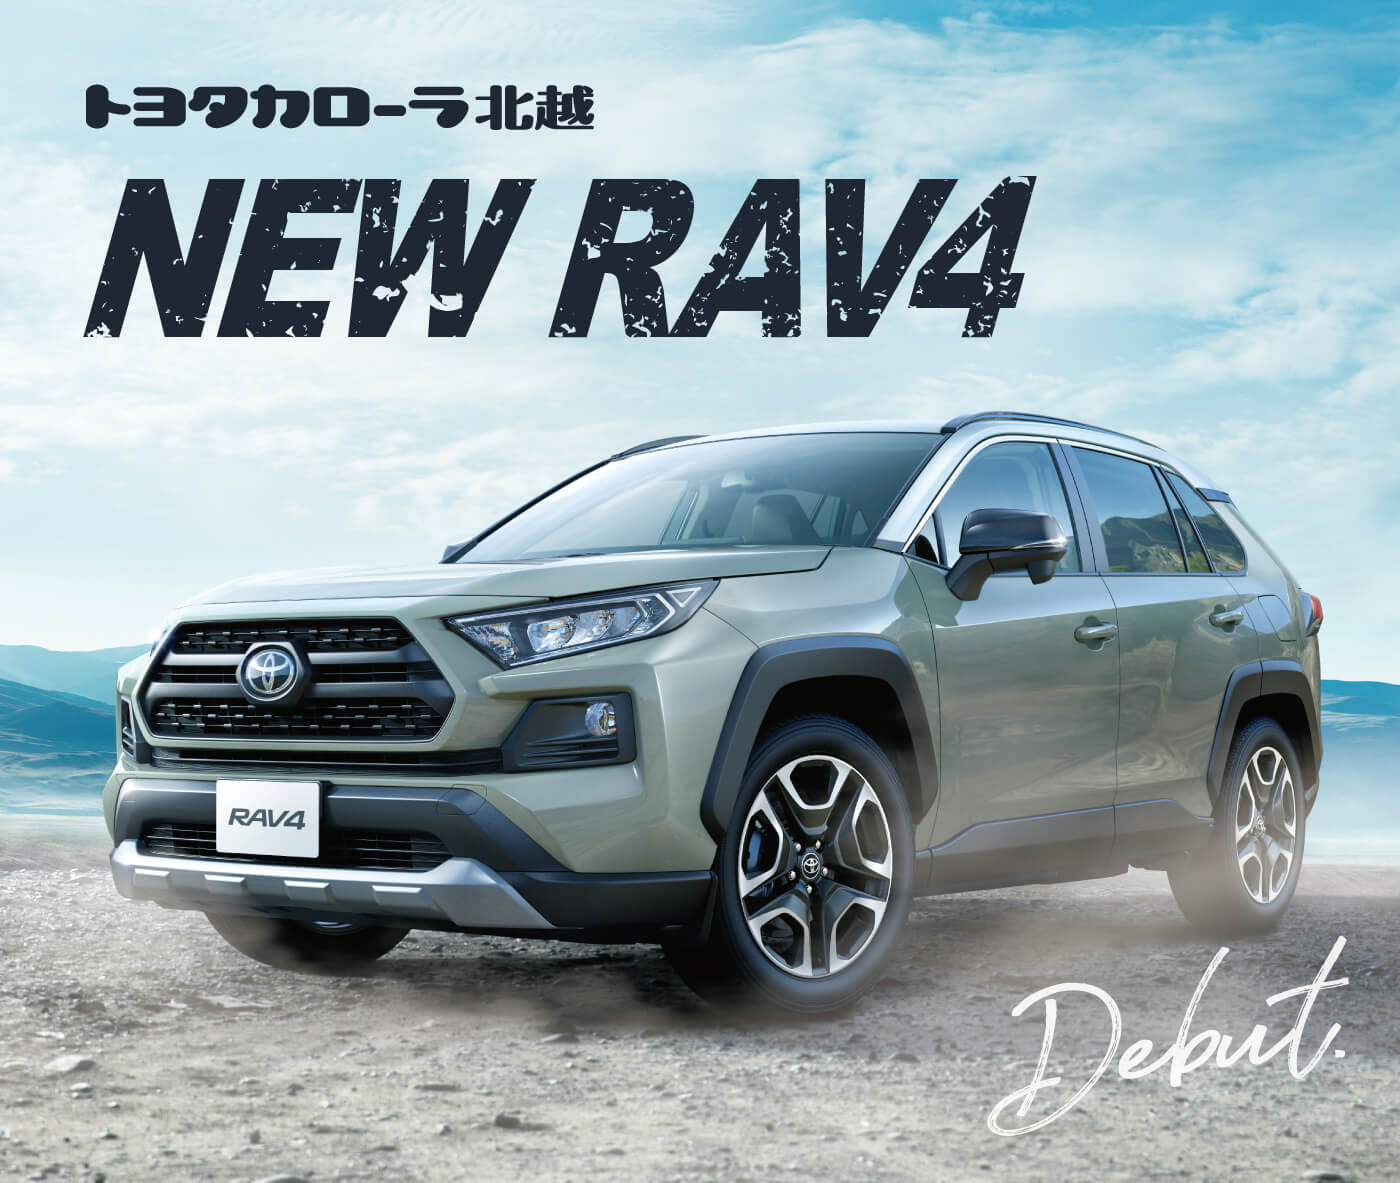 New トヨタカローラ北越 RAV4 Debut.